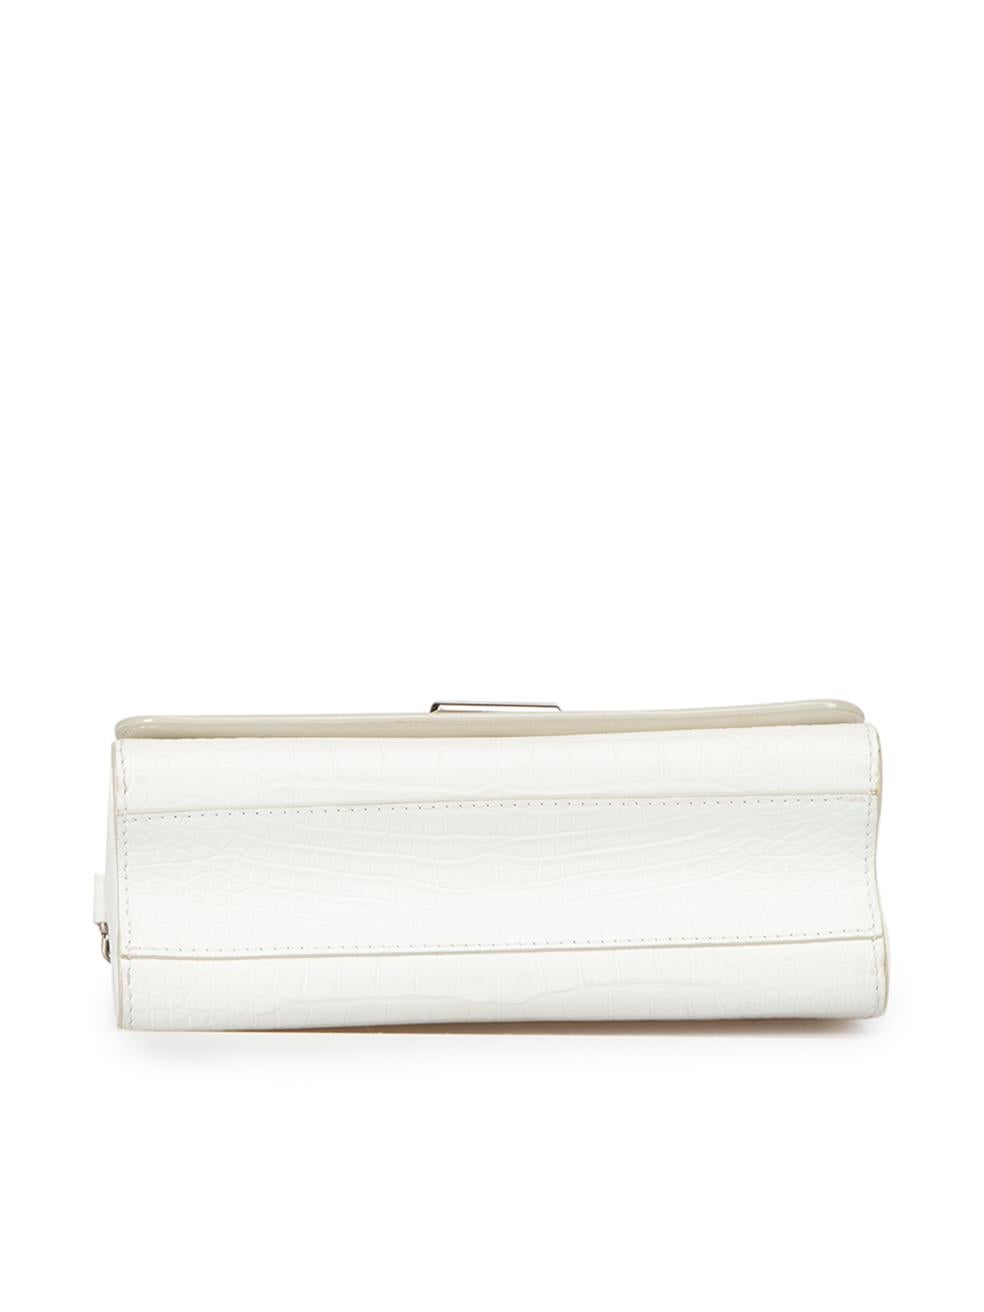 Louis Vuitton Women's White Leather Crocodile Embossed Twist MM Shoulder Bag 1